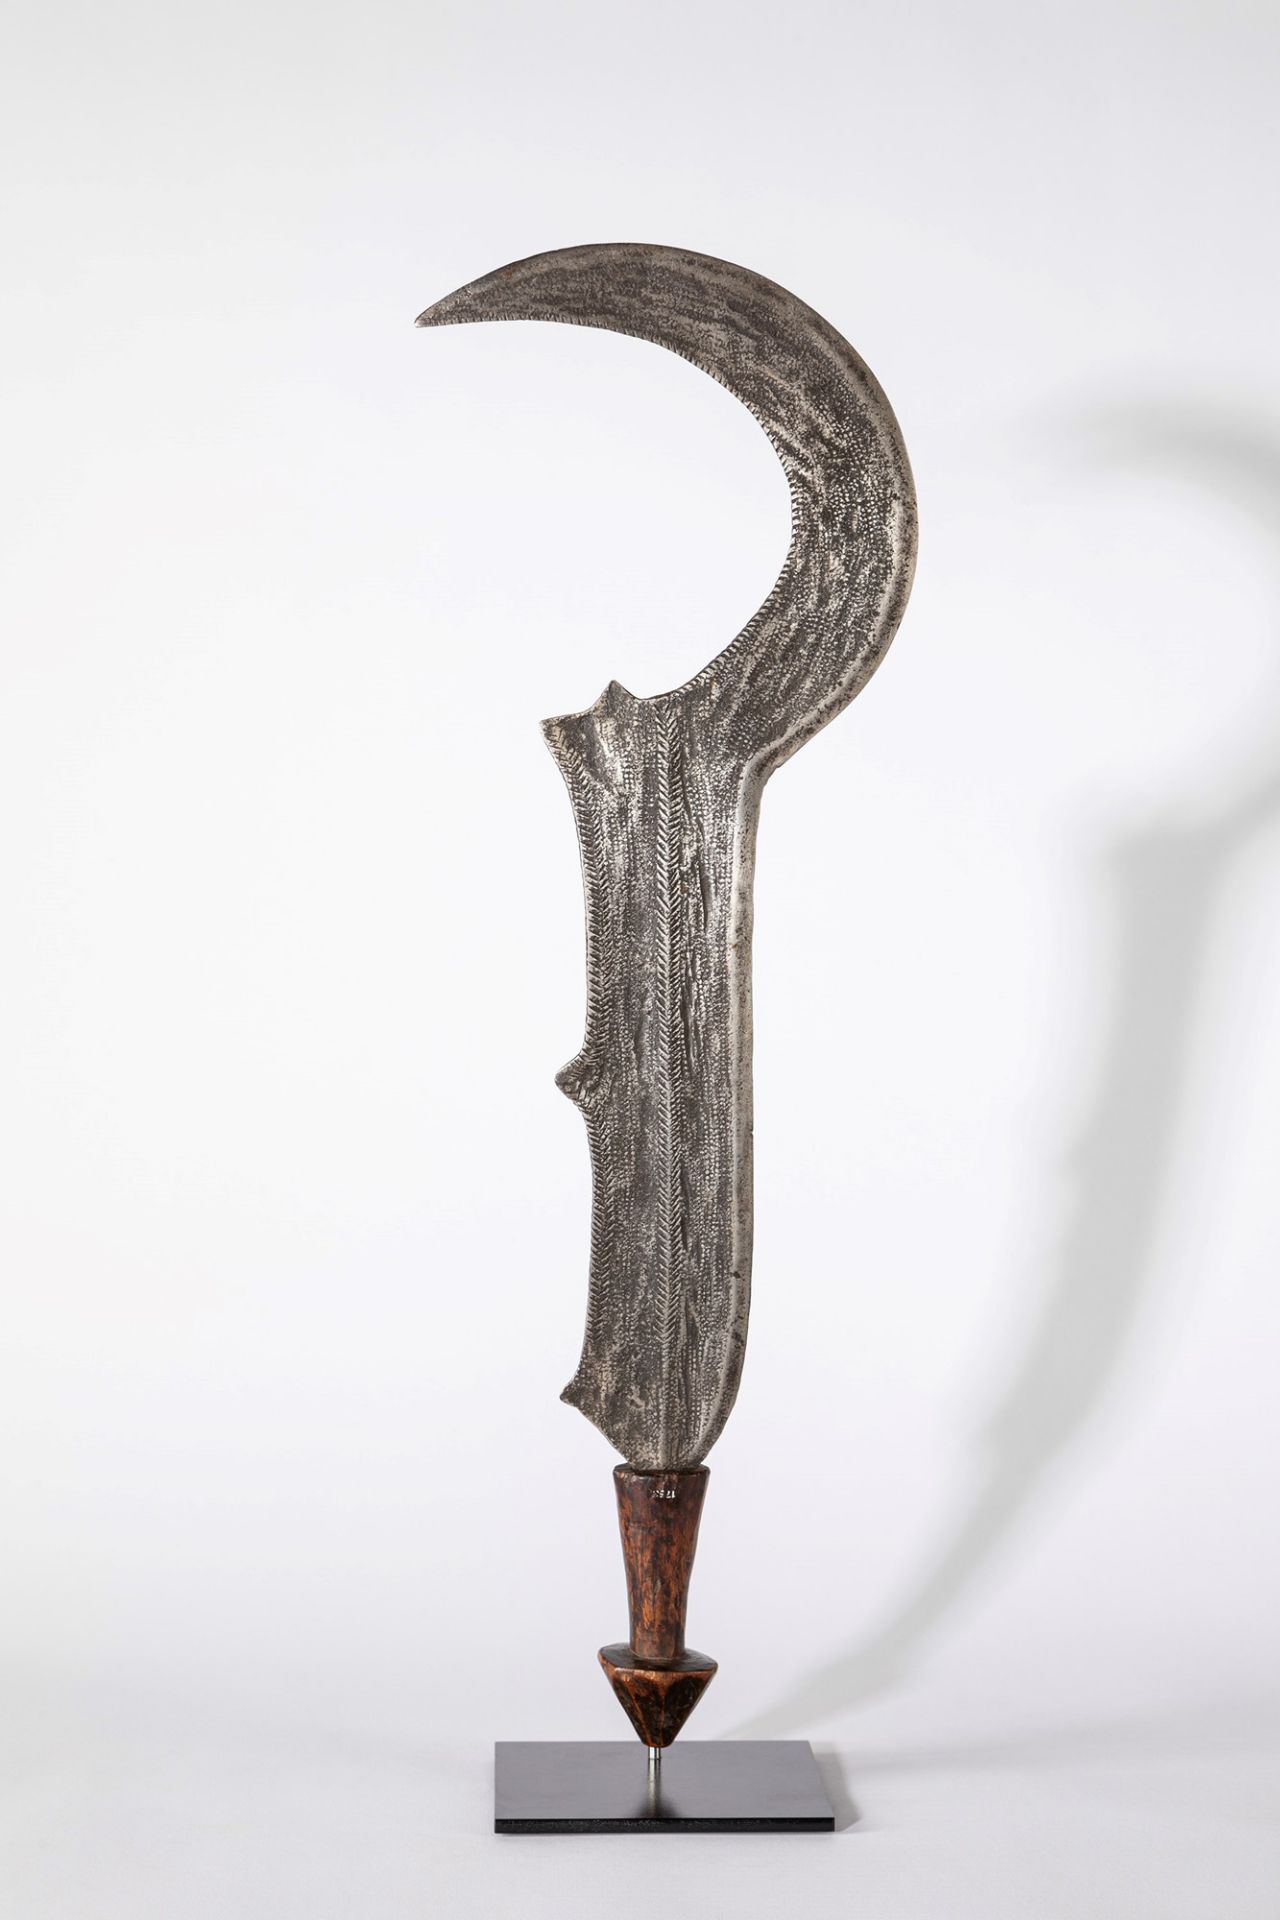 LOBALA Congo Kinshasa - Rare ceremonial knife